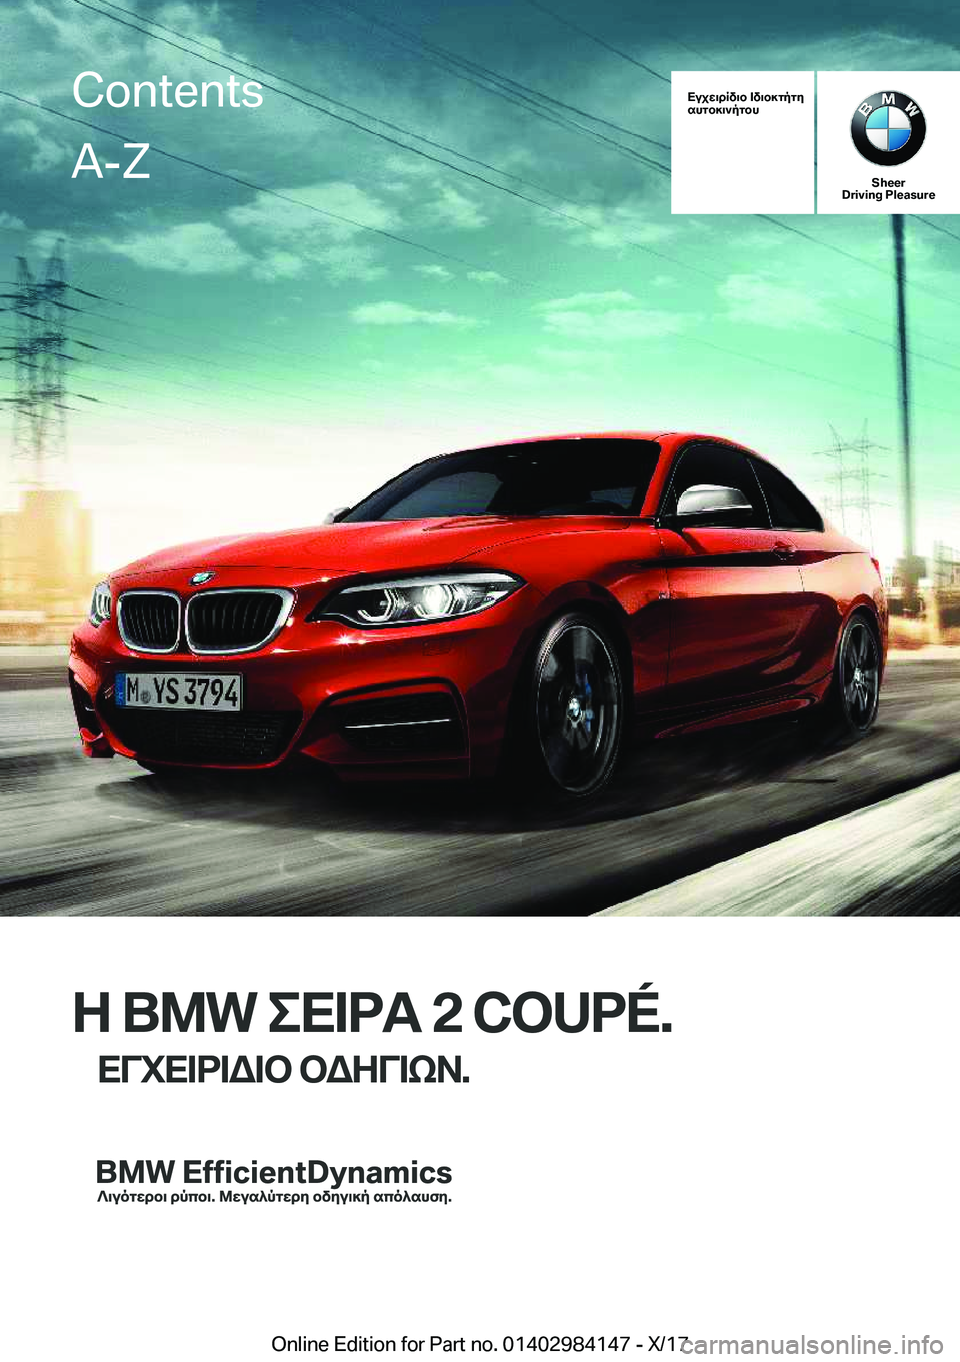 BMW 2 SERIES COUPE 2018  ΟΔΗΓΌΣ ΧΡΉΣΗΣ (in Greek) Xujw\dRv\b�=v\b]gpgy
shgb]\`pgbh
�S�h�e�e�r
�D�r�i�v�i�n�g��P�l�e�a�s�u�r�e
;��B�M�W�eX=dT��2��C�O�U�P�